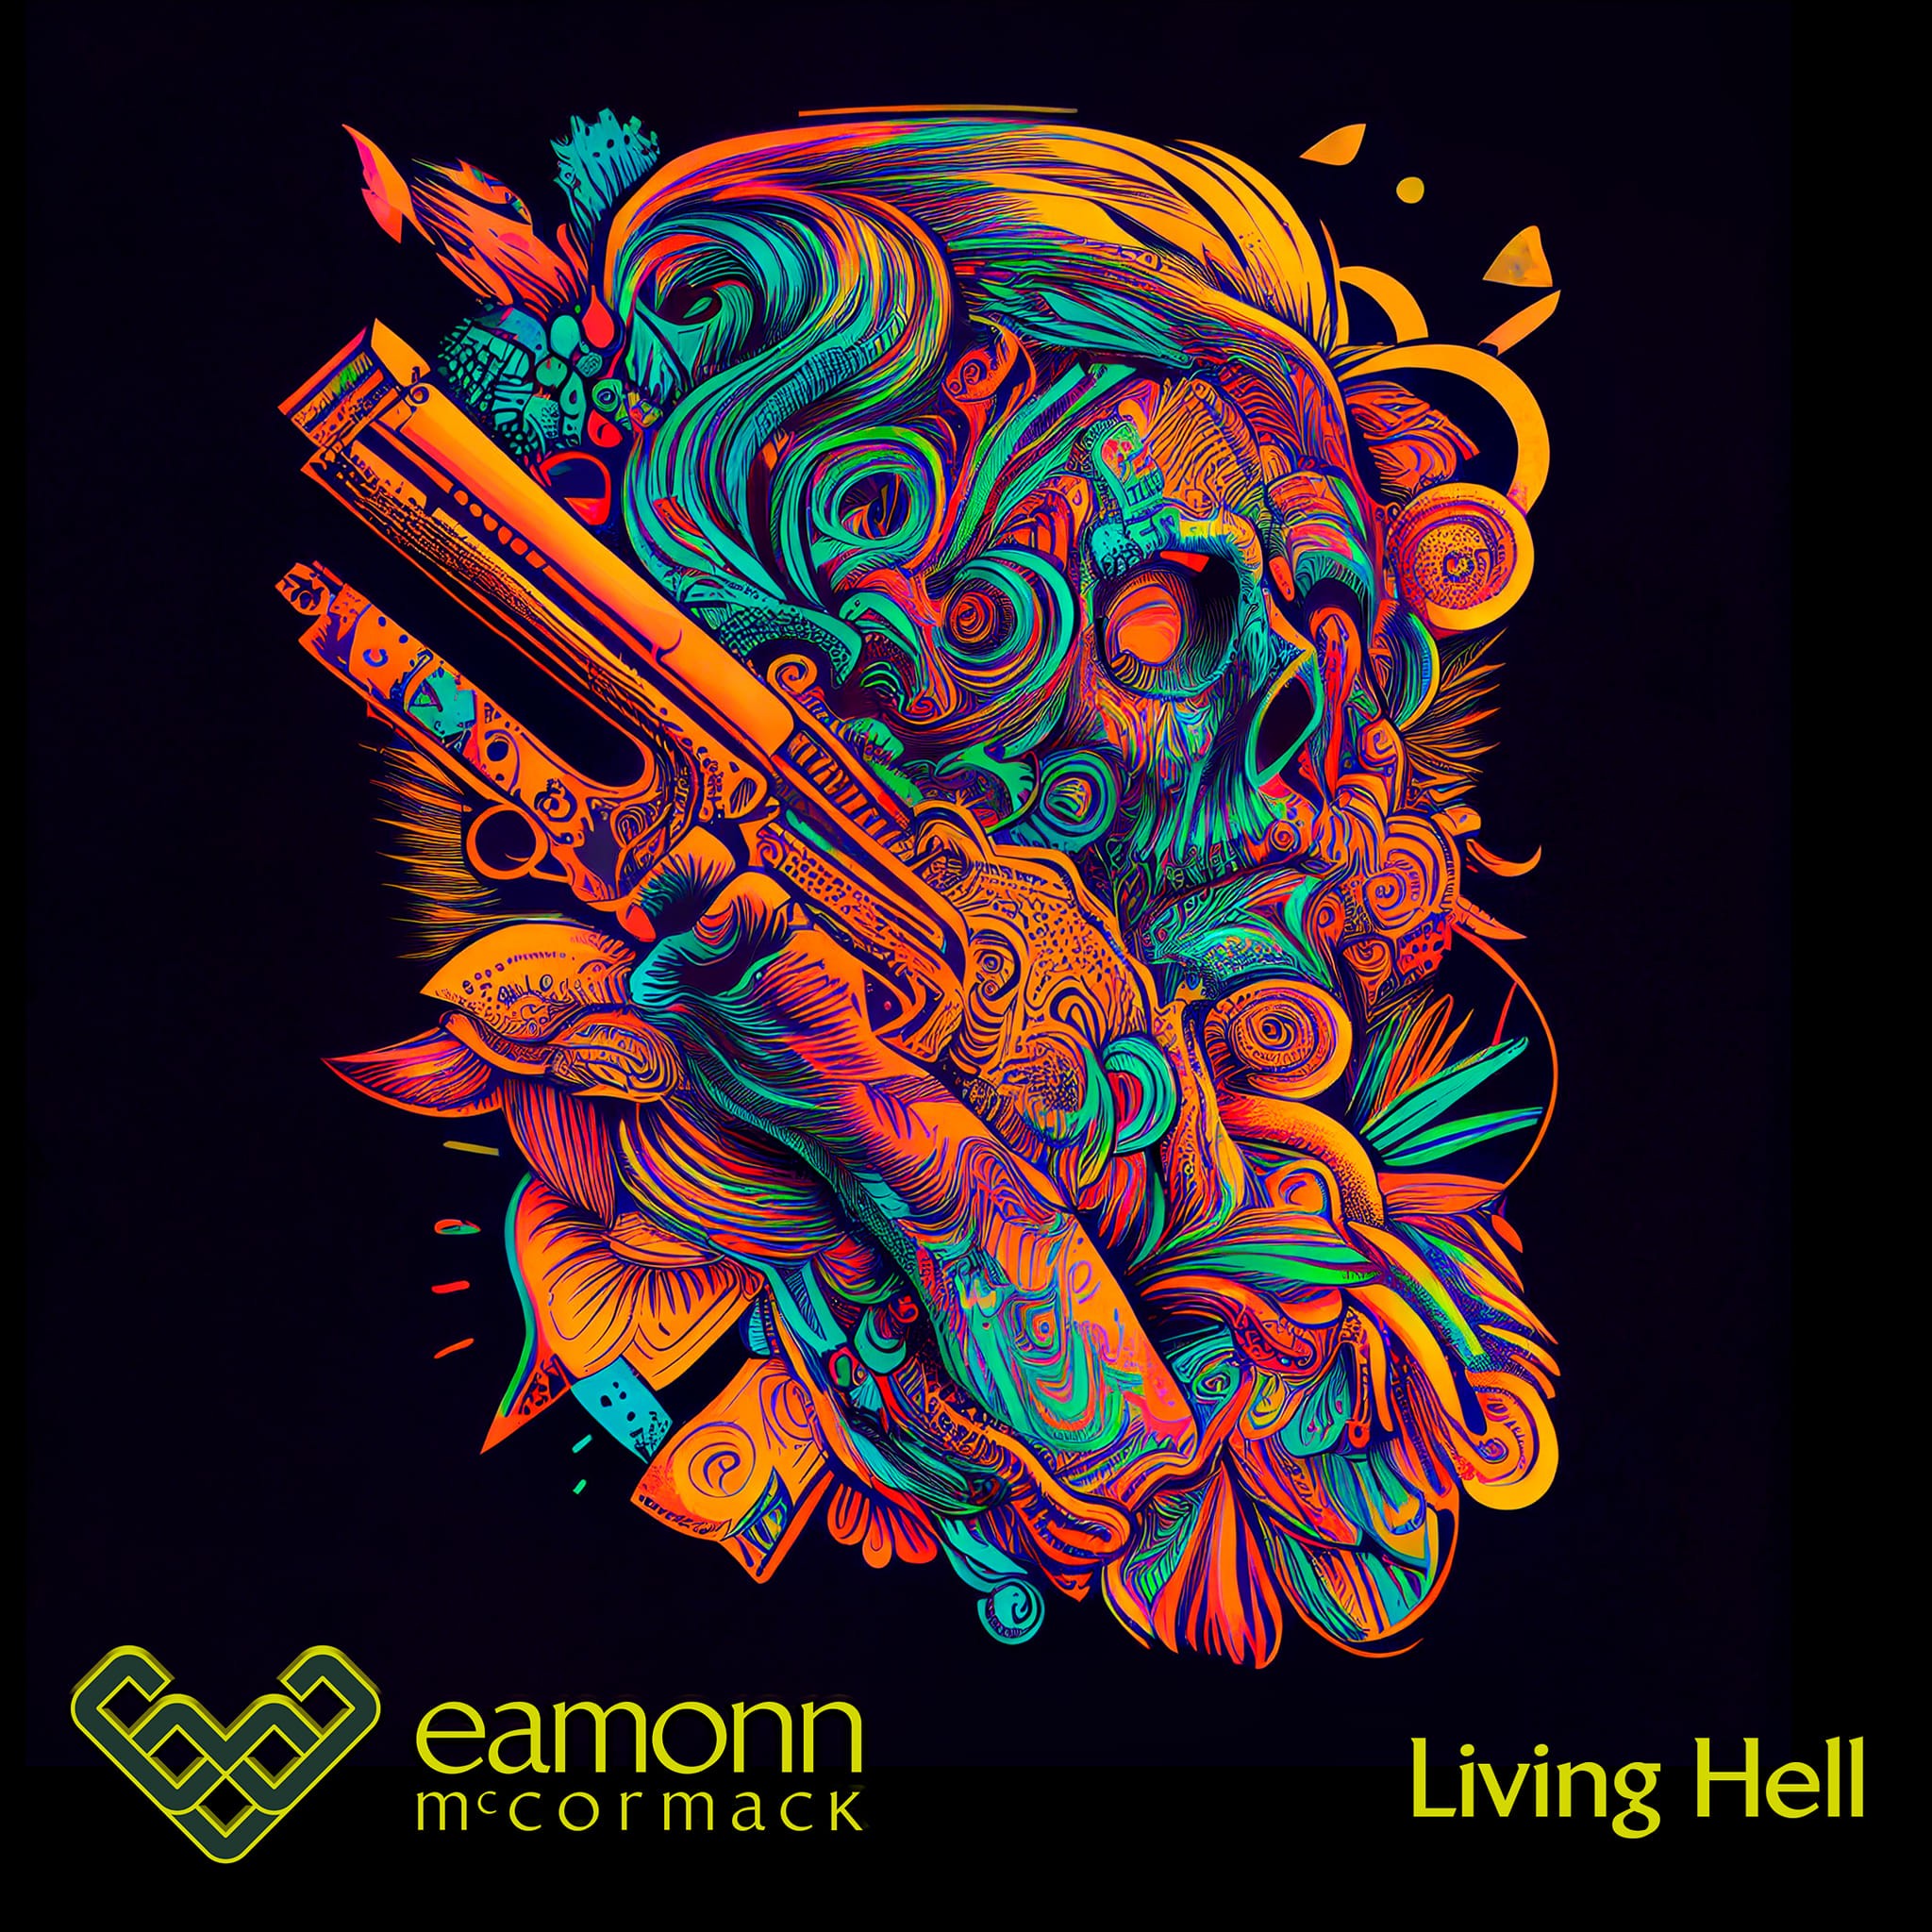 Eamonn McCormack - Living Hell